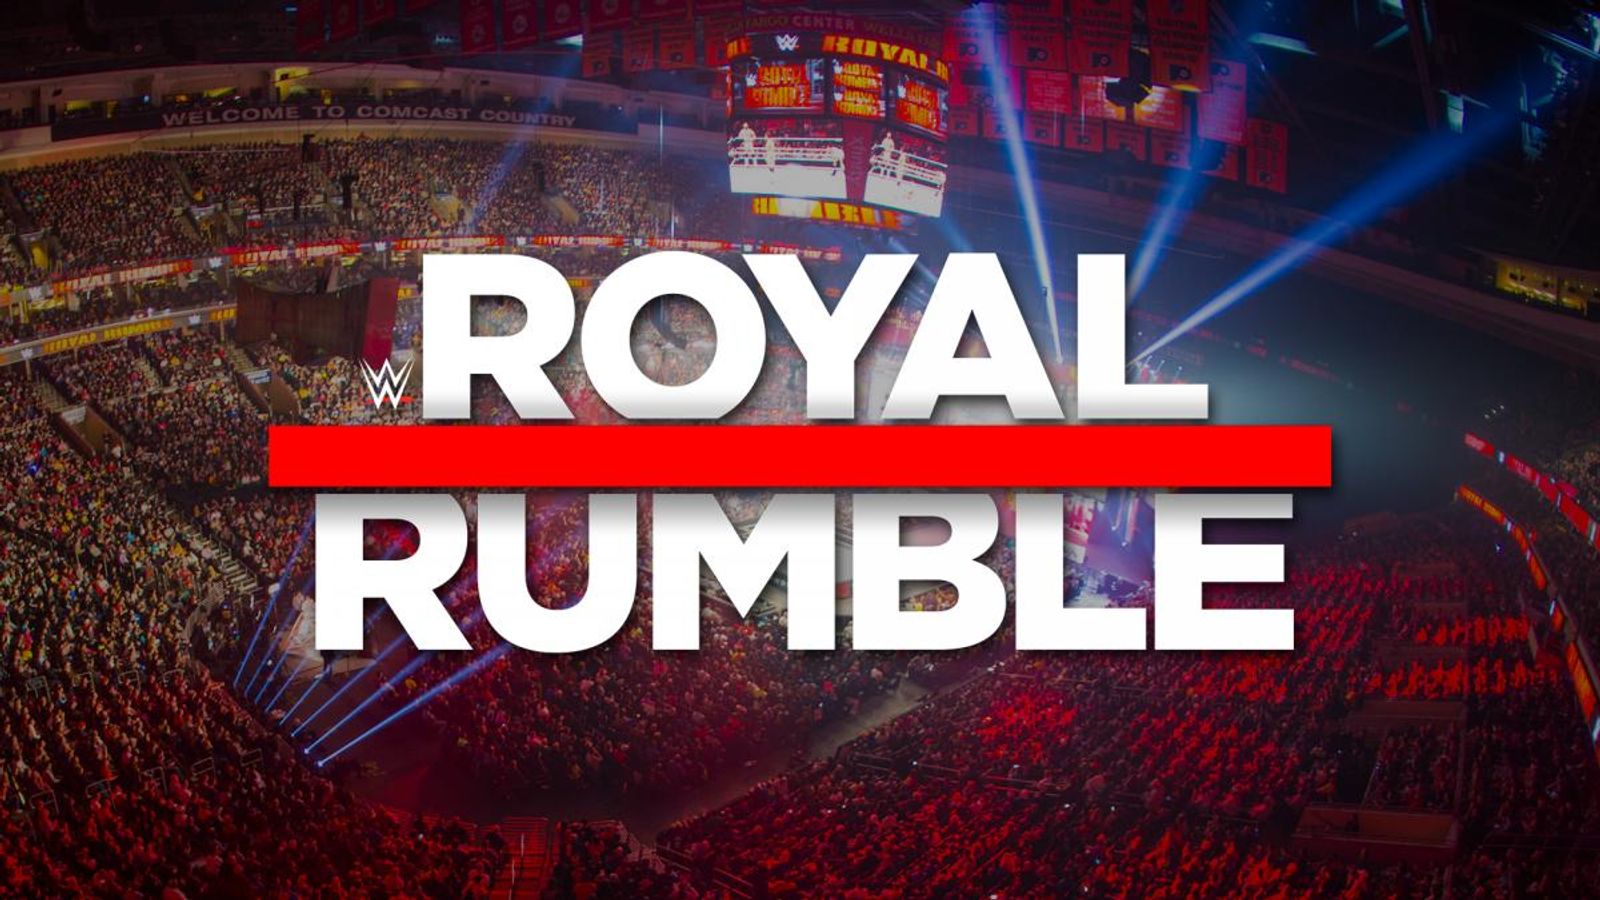 WWE Royal Rumble headed to Philadelphia in January 2018.